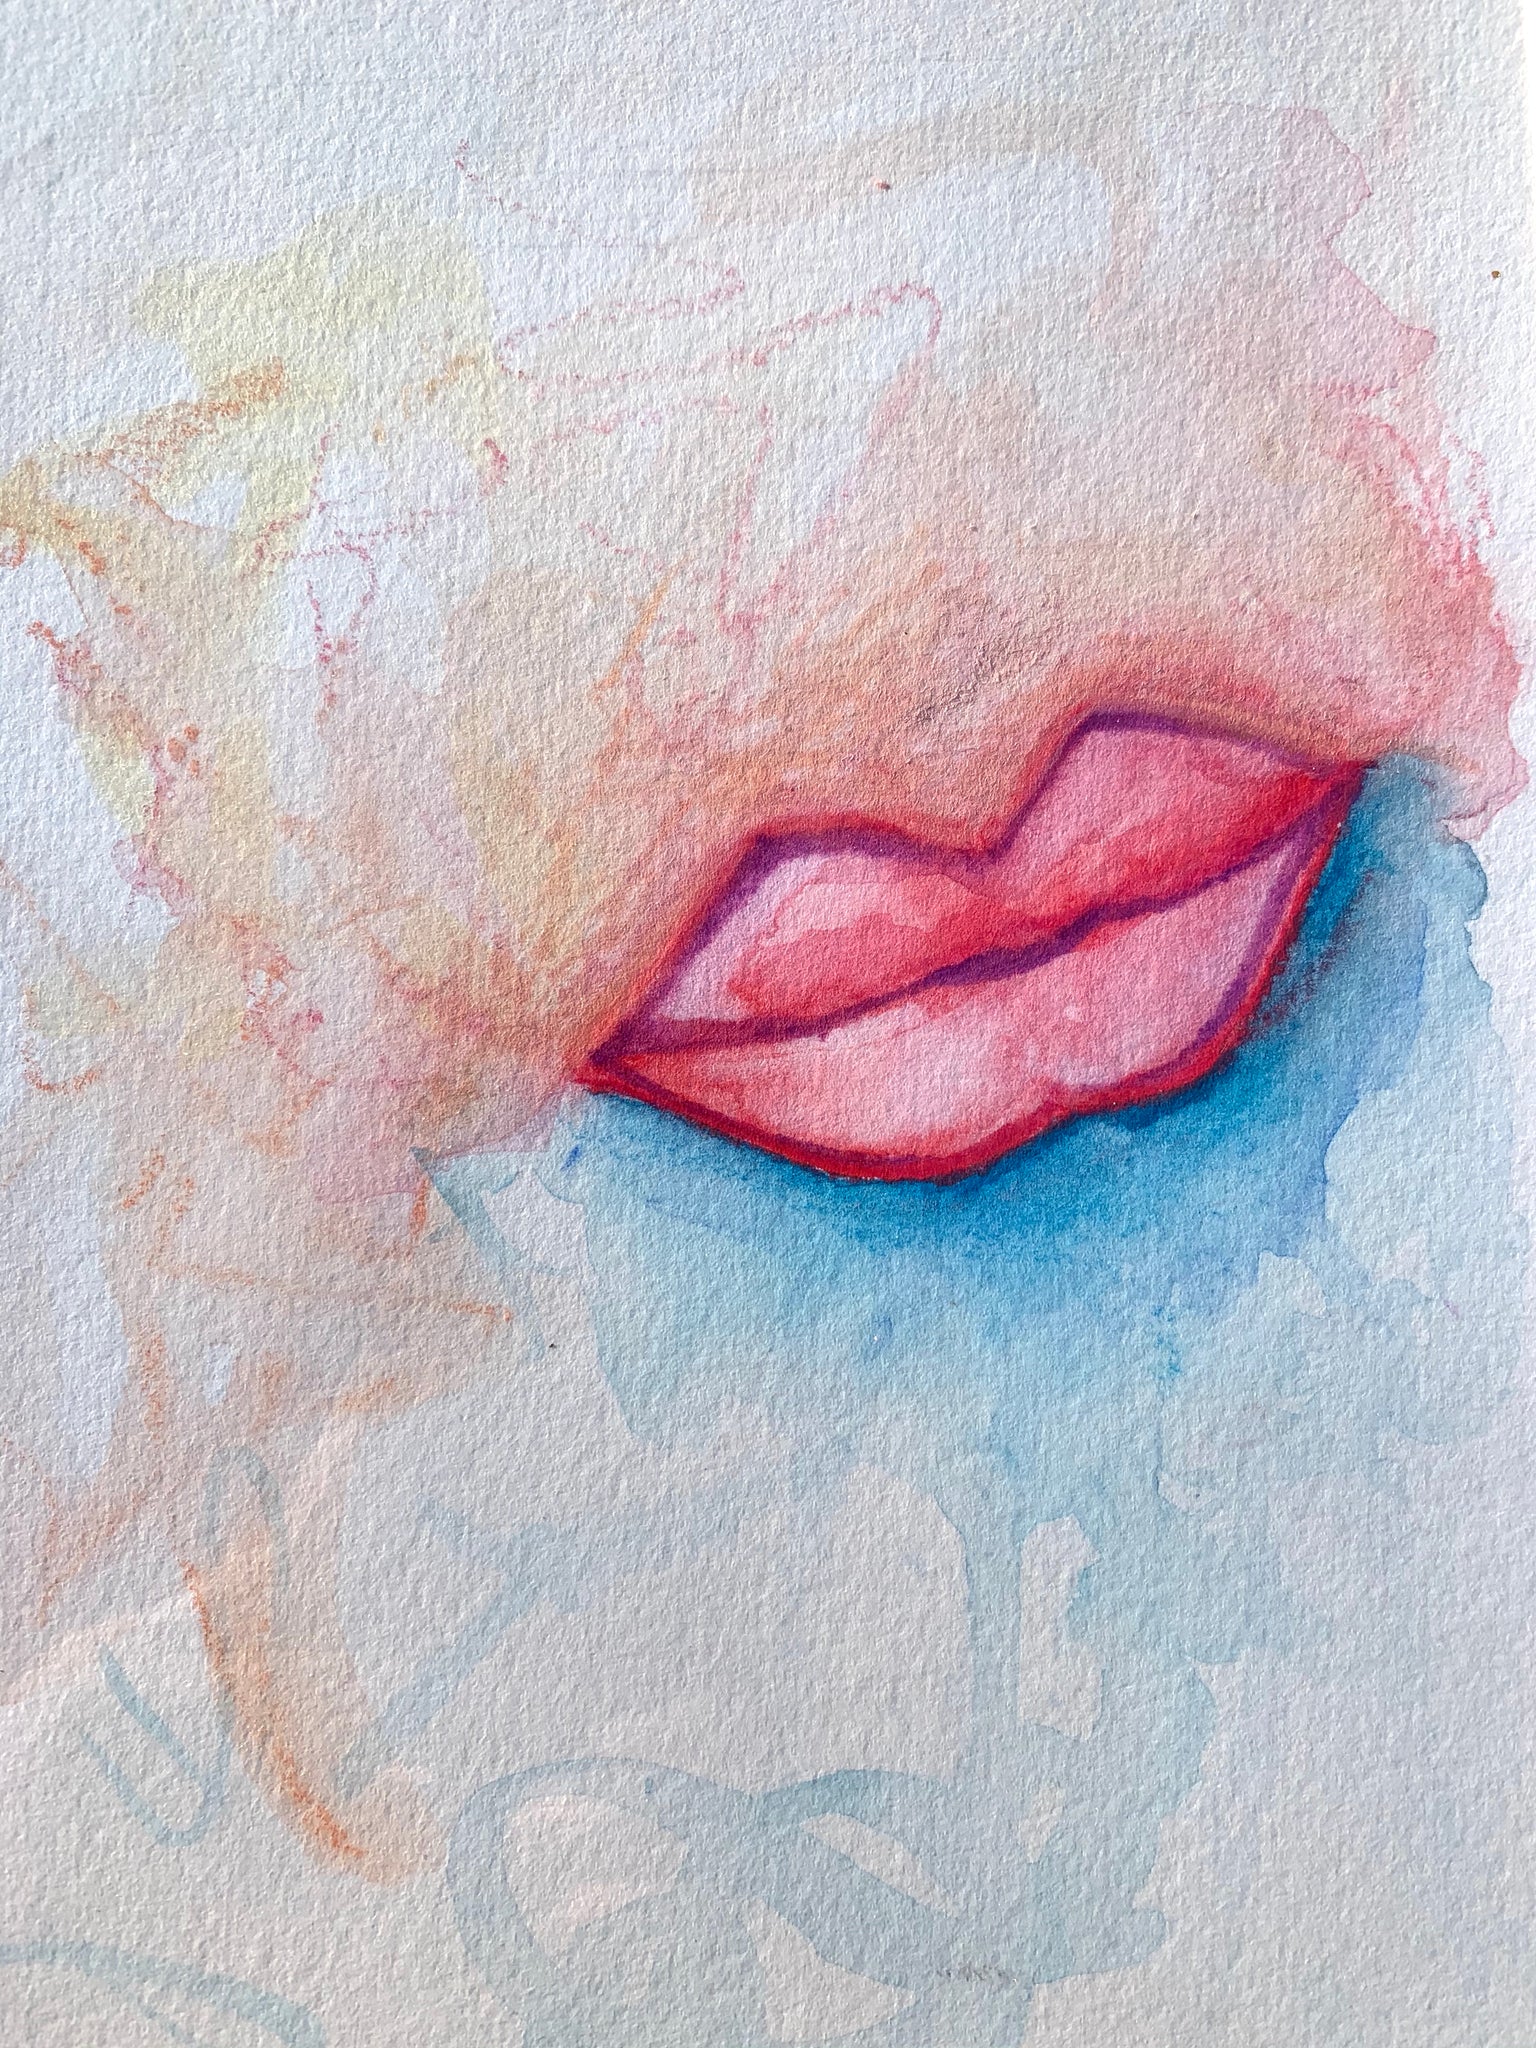 Abstract Lip Study